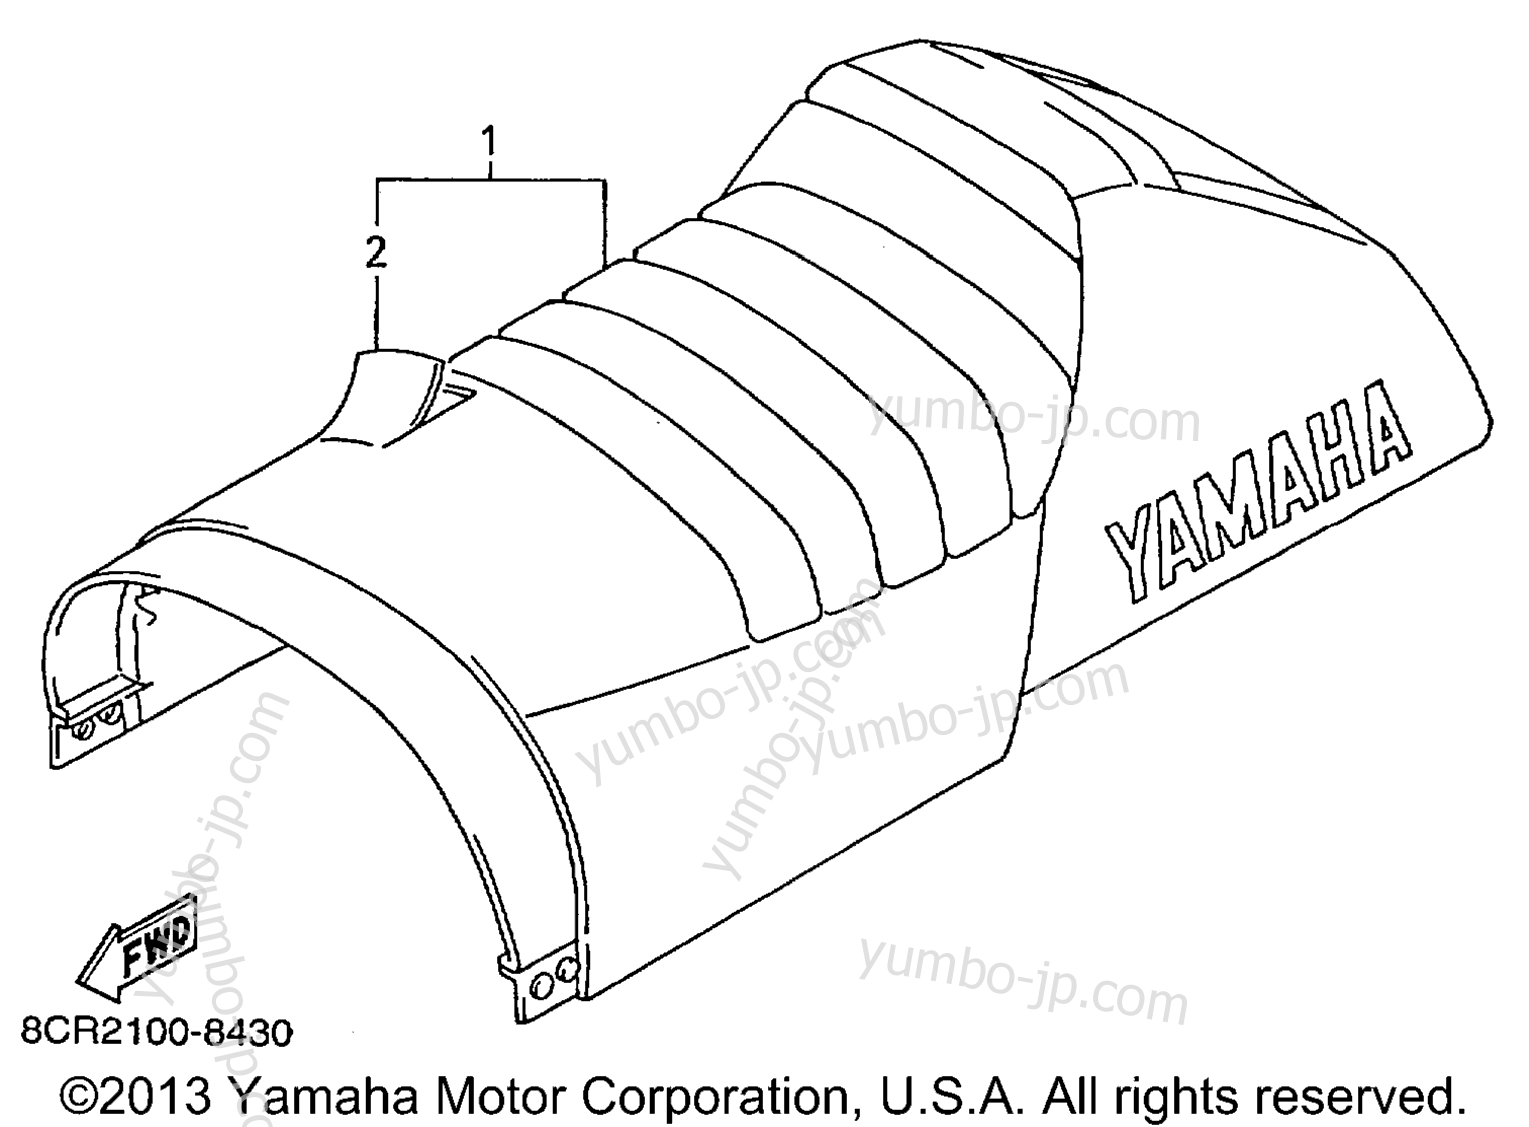 Alternate Single Seat Assy for snowmobiles YAMAHA VMAX 700 XTC DELUXE (ELEC START) (VX700XTCDB) 1998 year